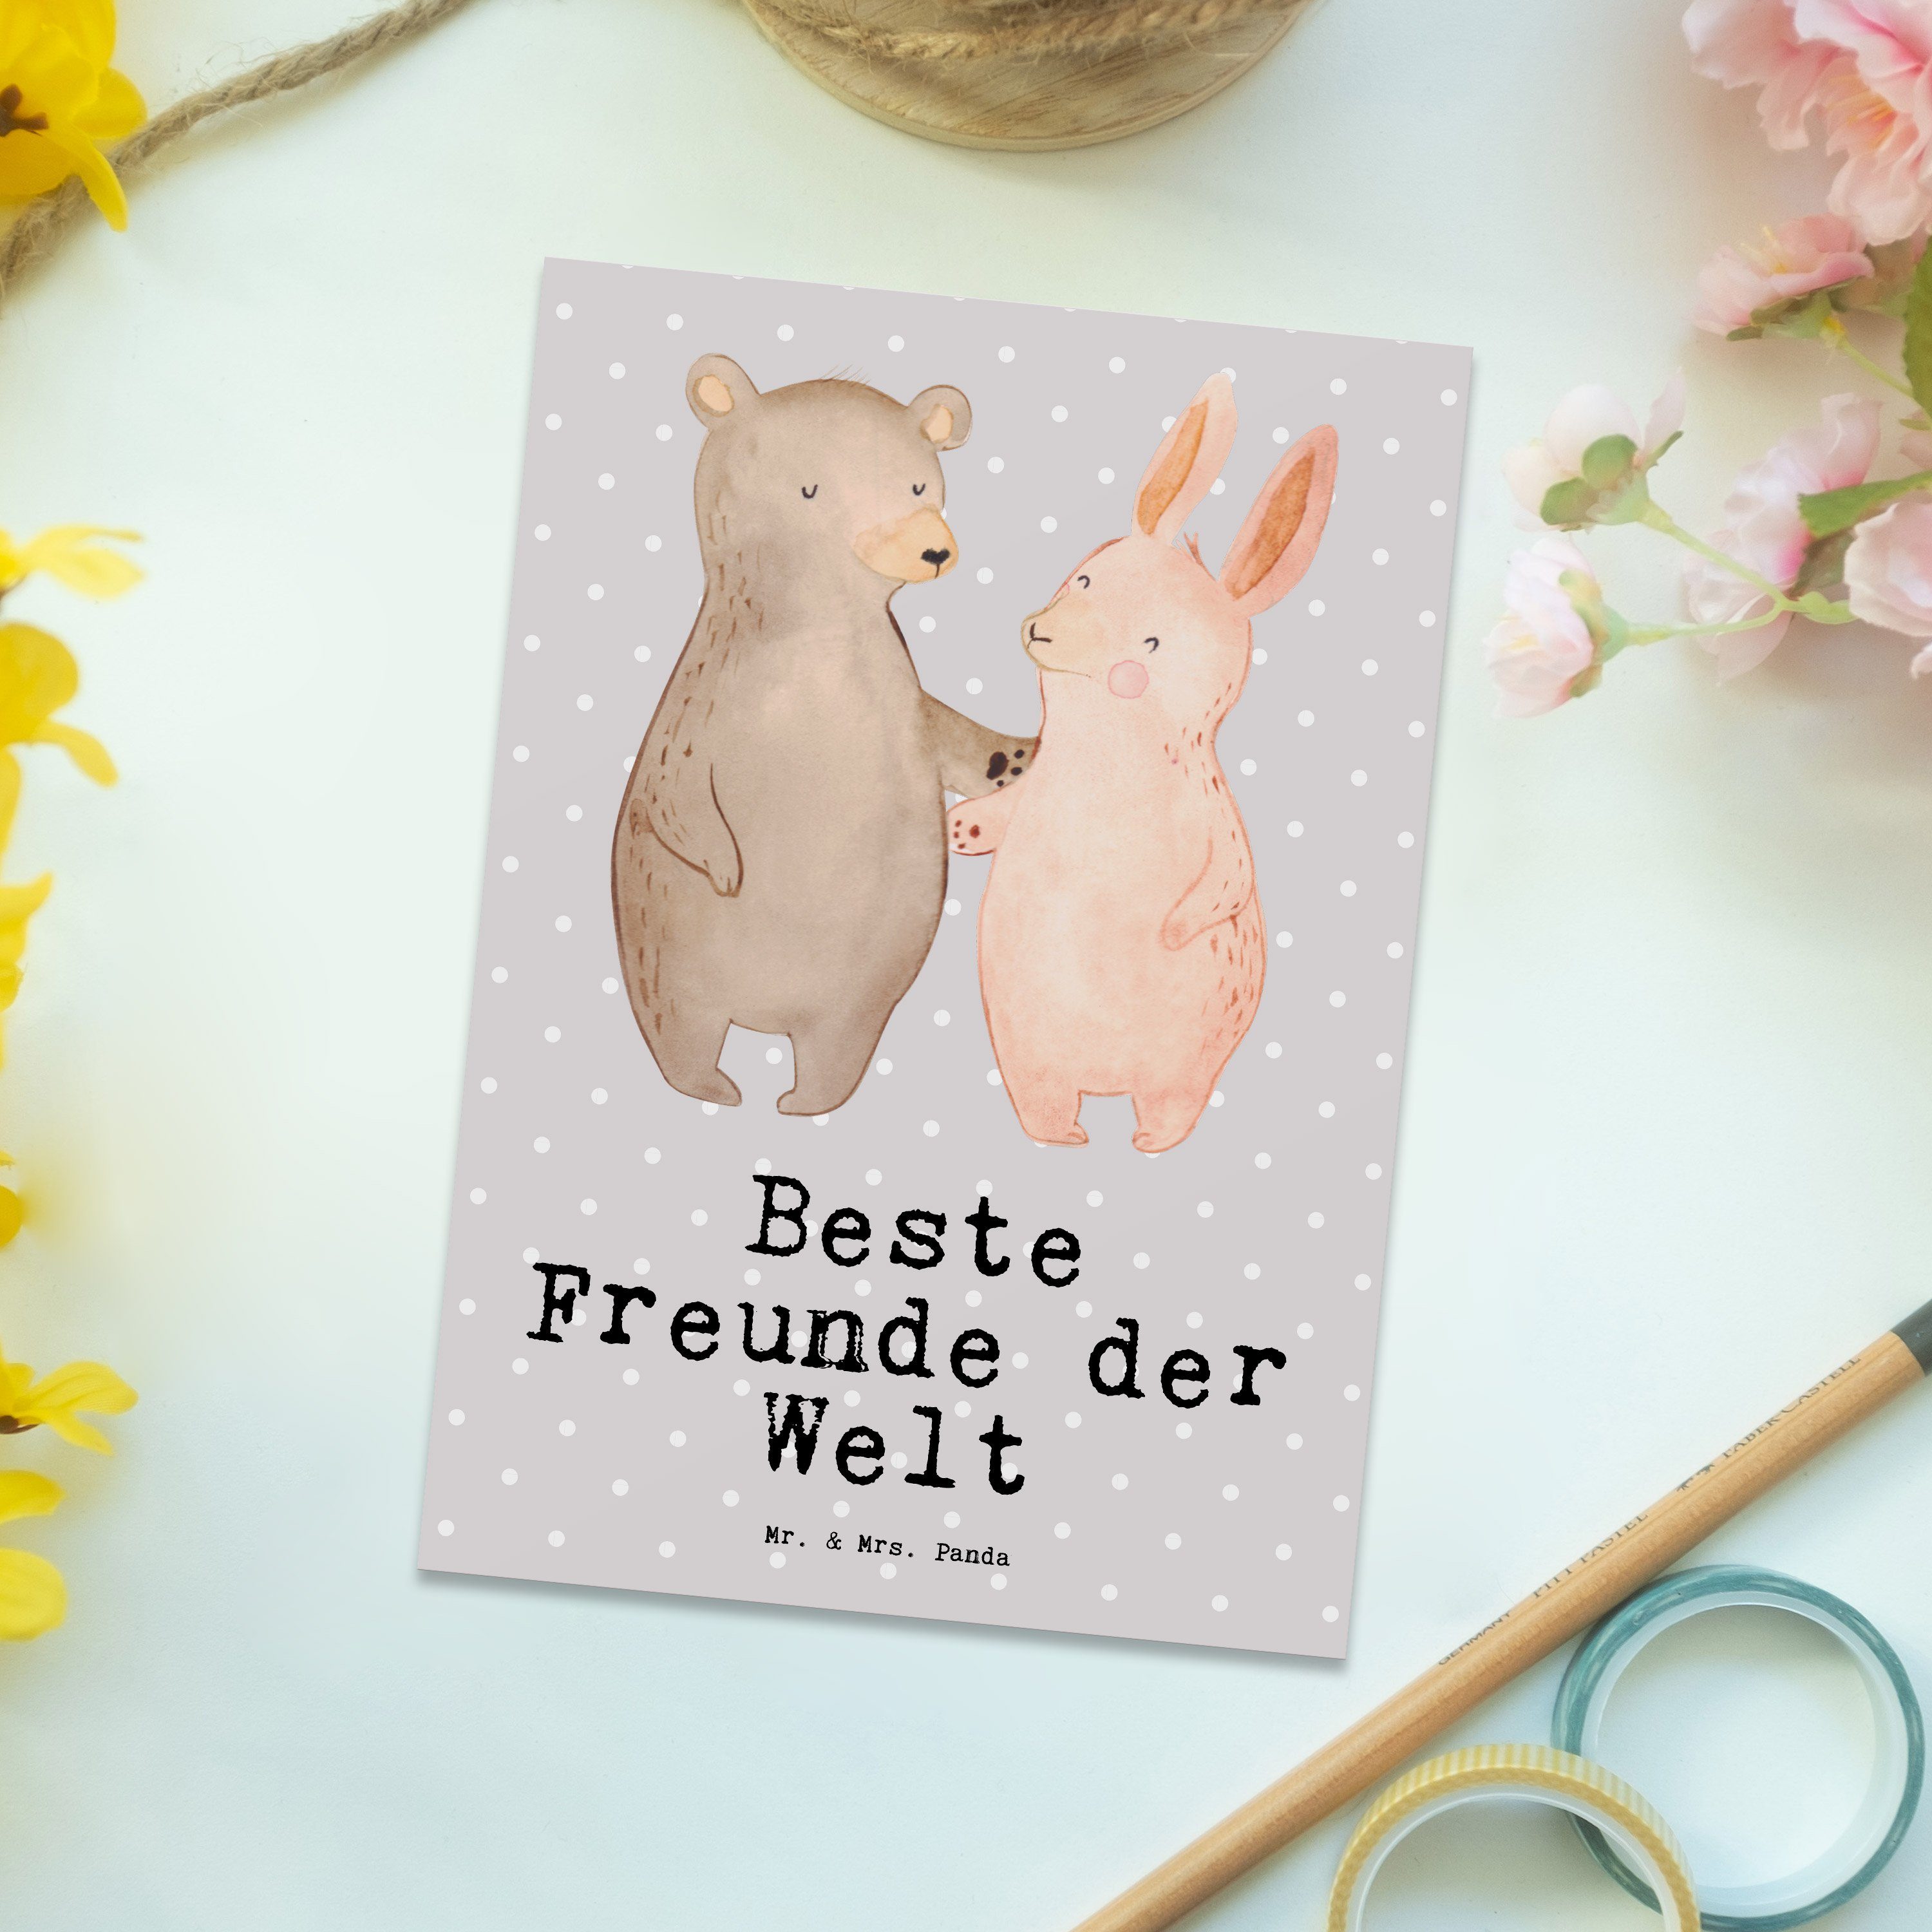 Mr. friends Hase Beste & Grau Welt Panda - Geschenk, Pastell best der Postkarte Freunde Mrs. -